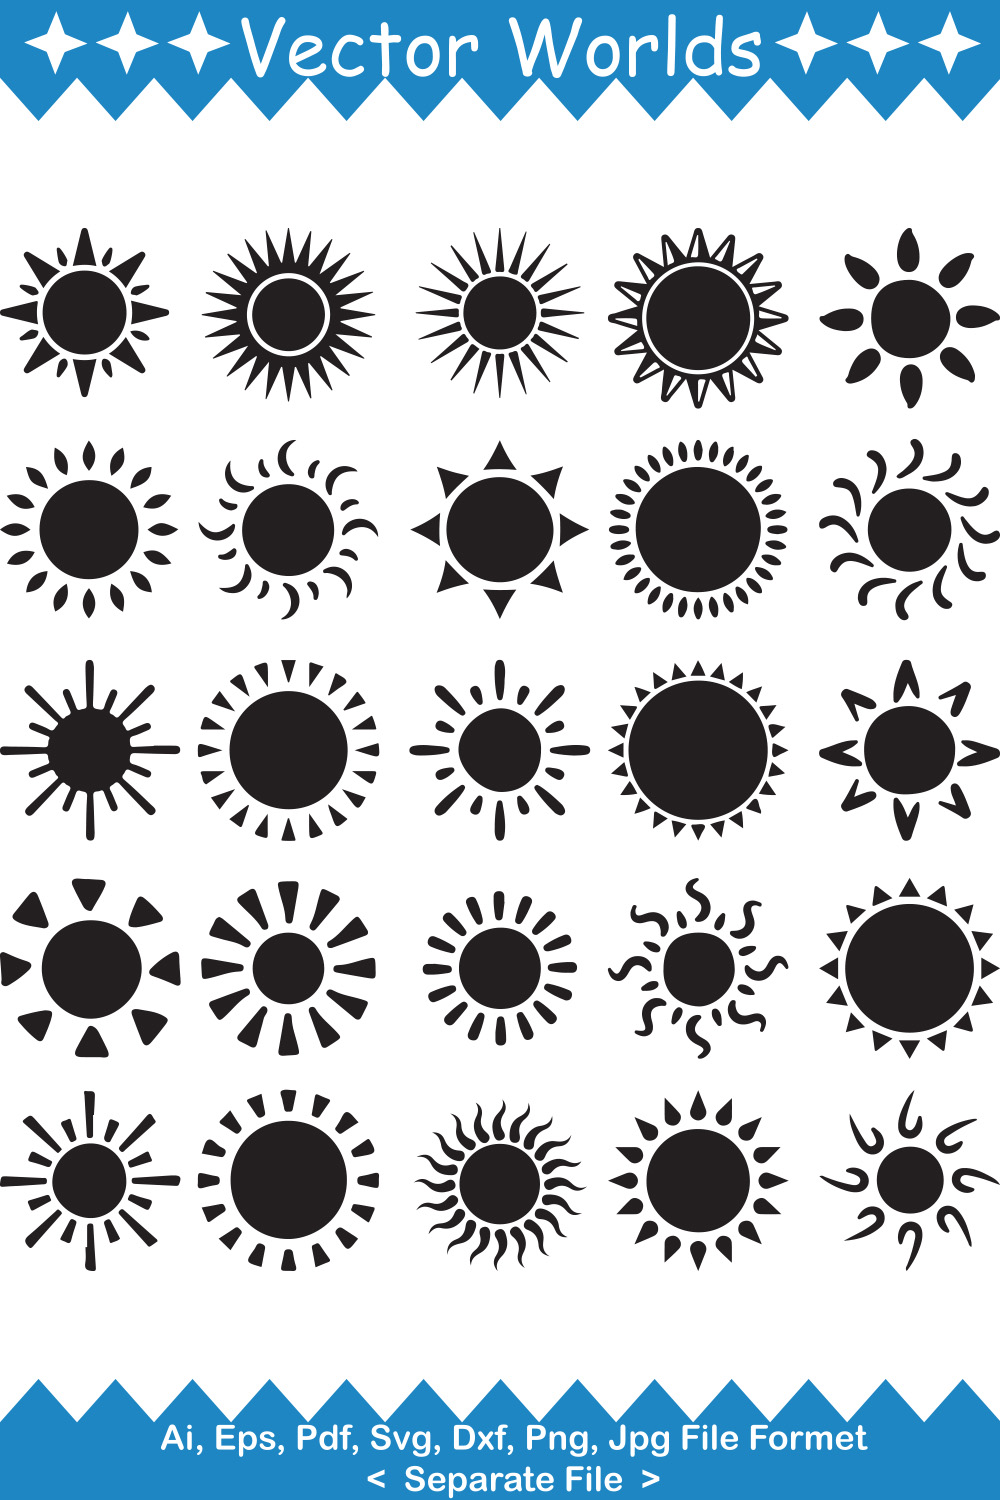 Set of vector unique images of sun silhouettes.